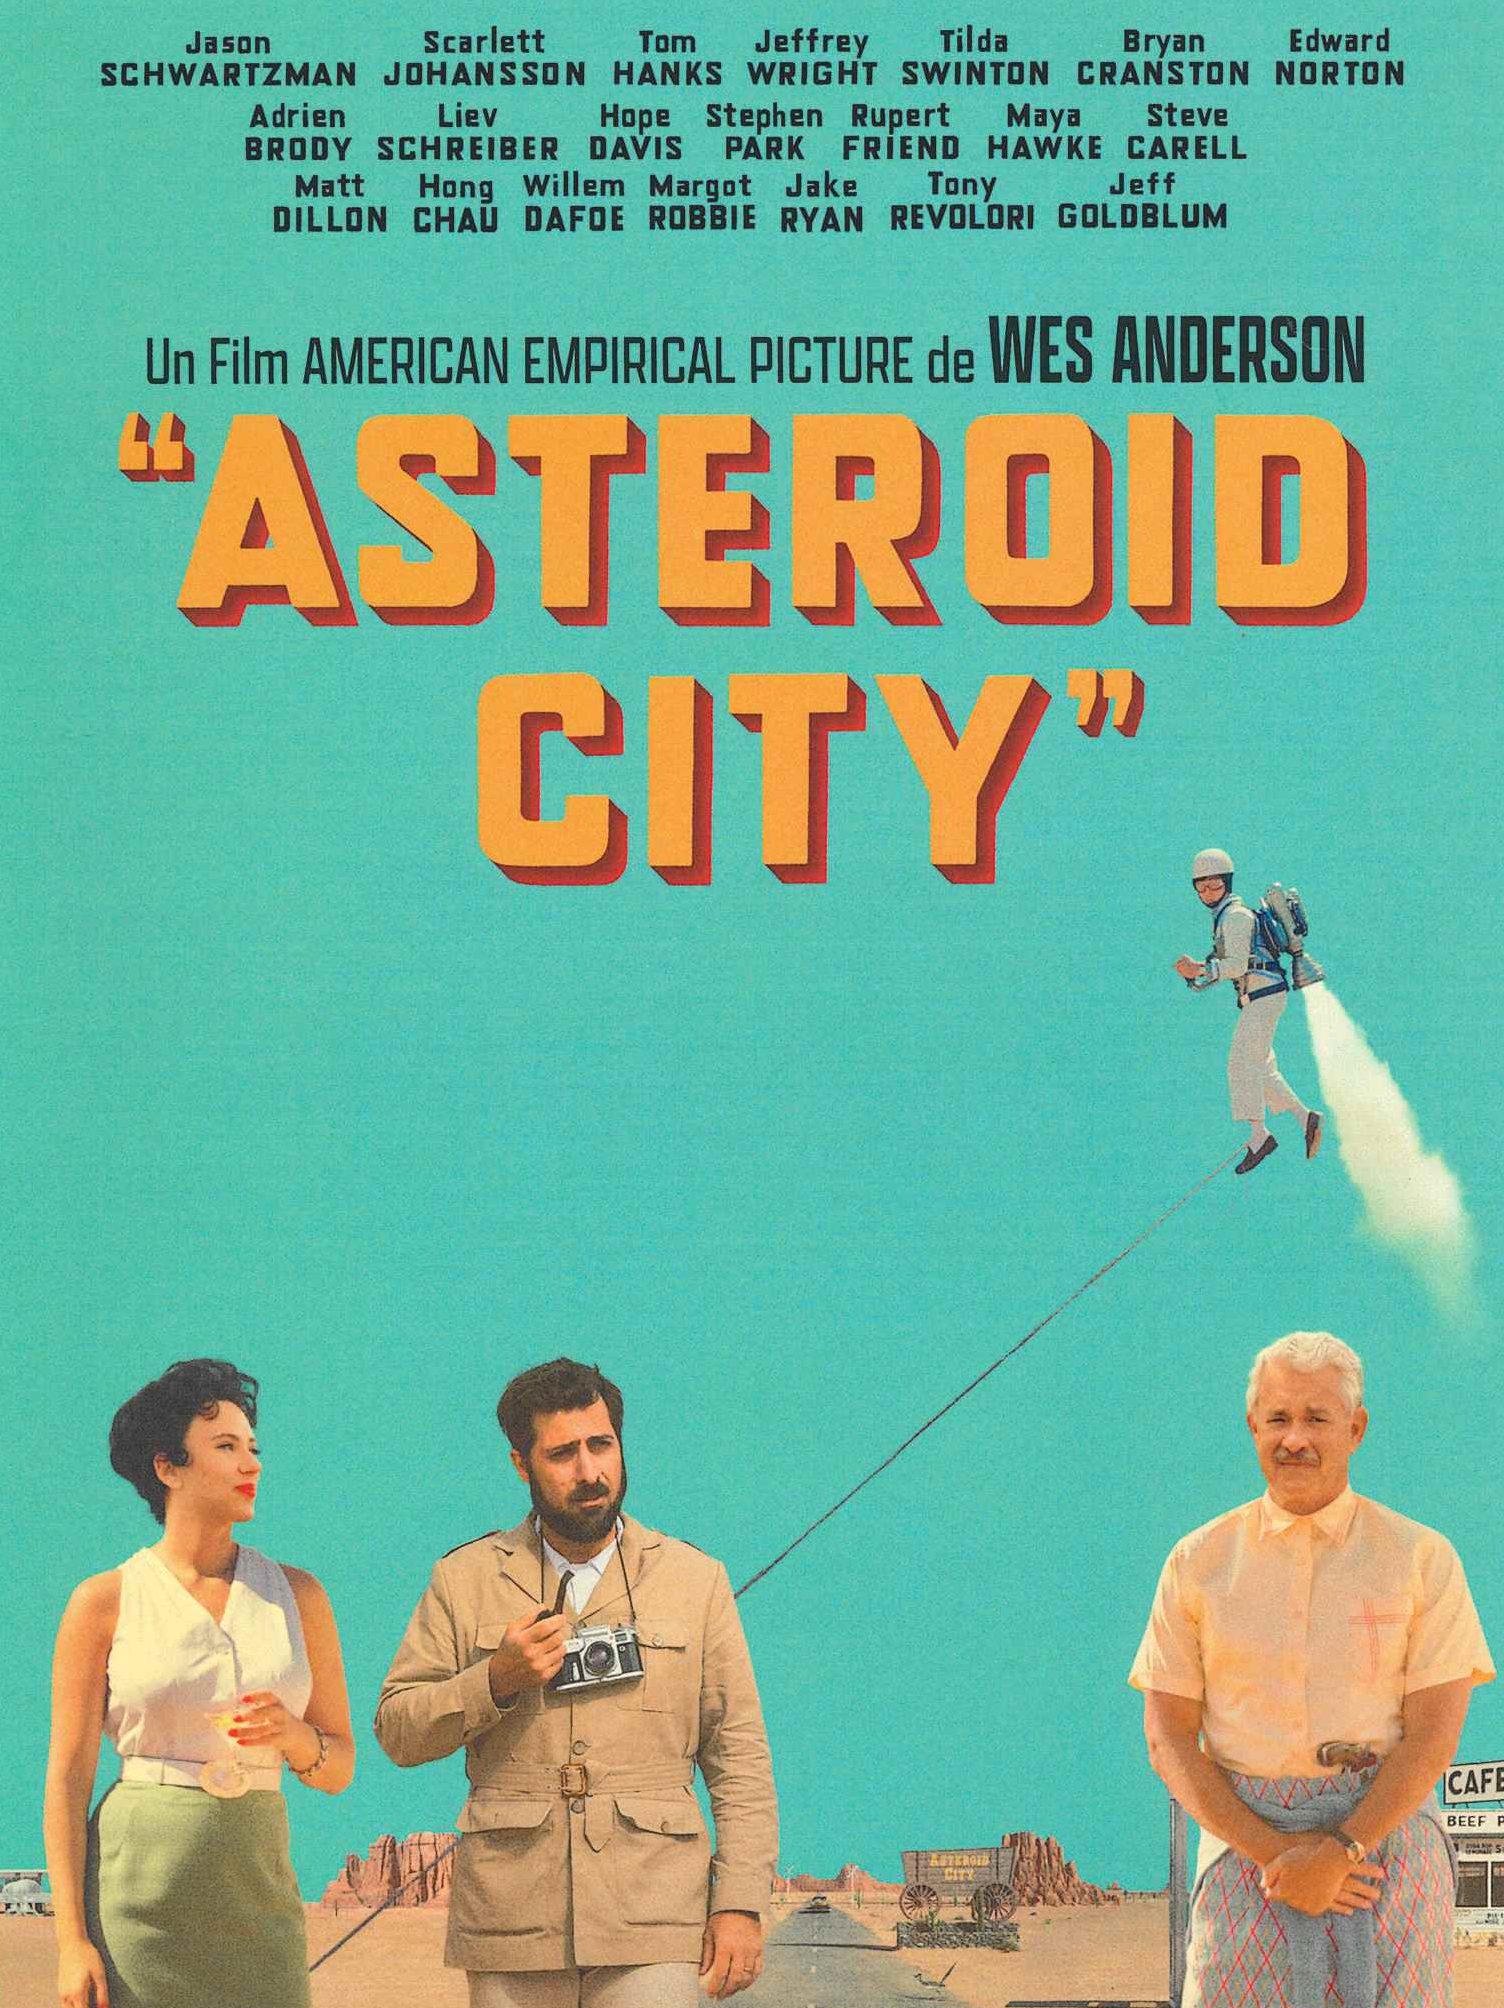 Asteroid City – ★